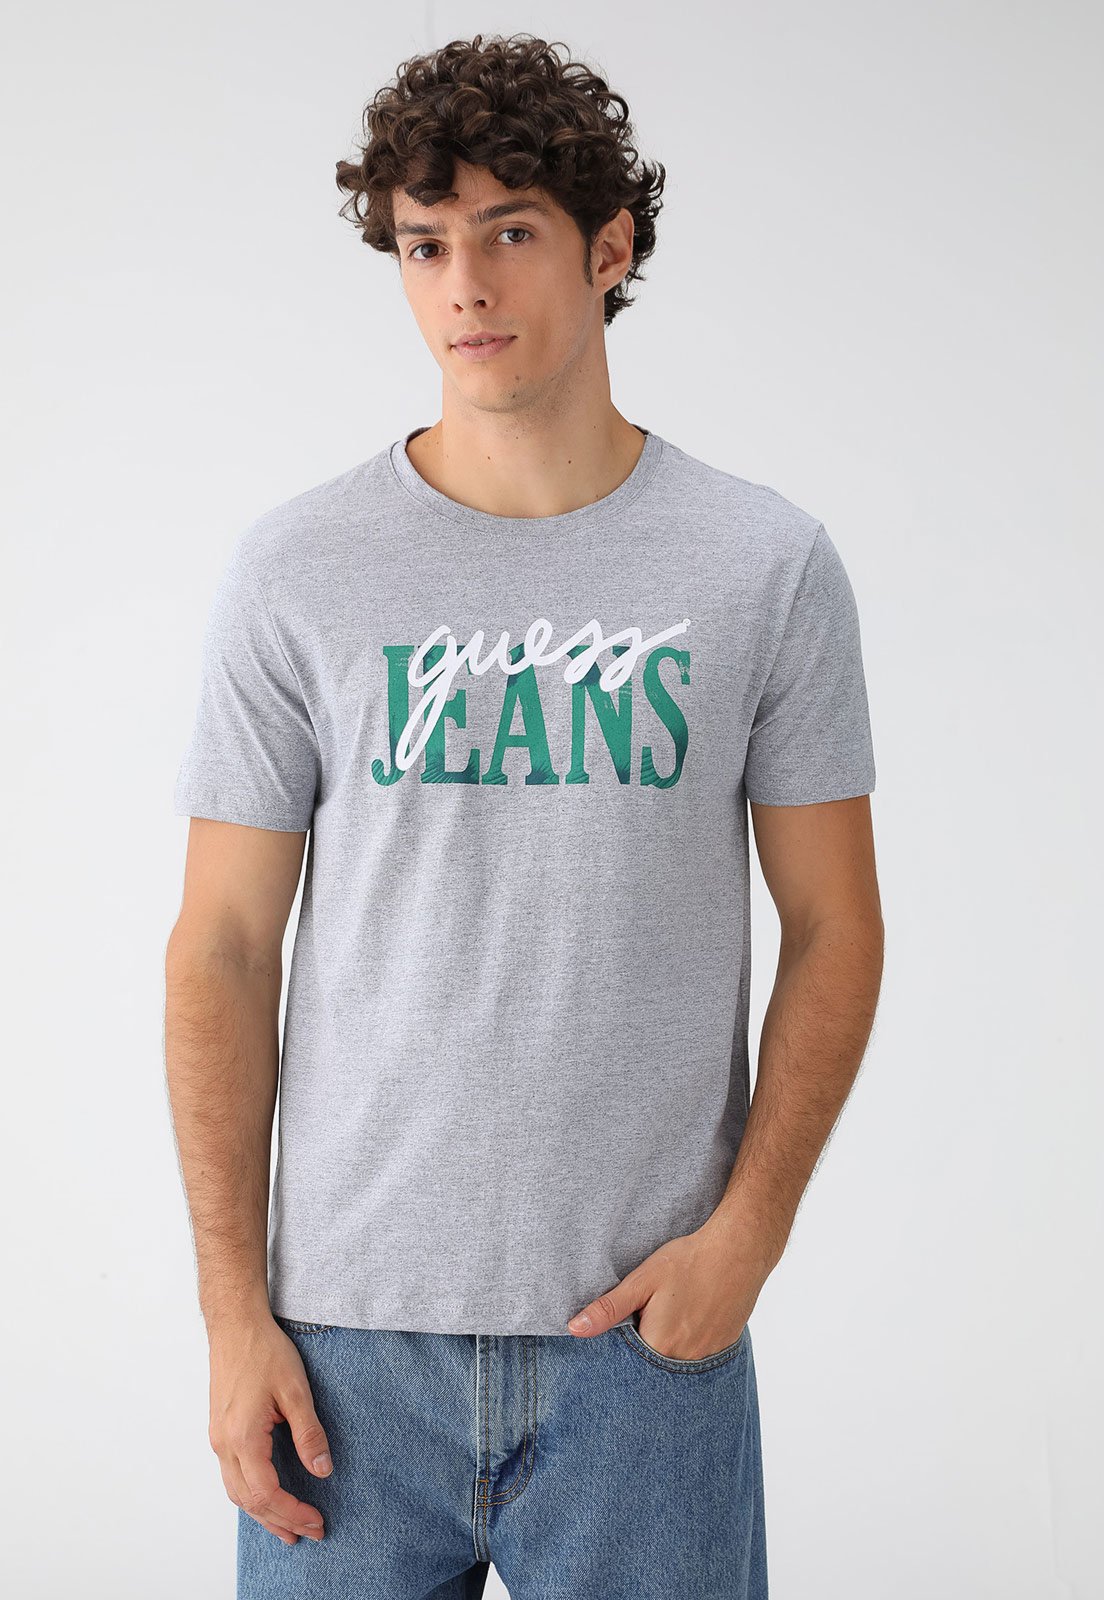 Camiseta Guess Logo Cinza